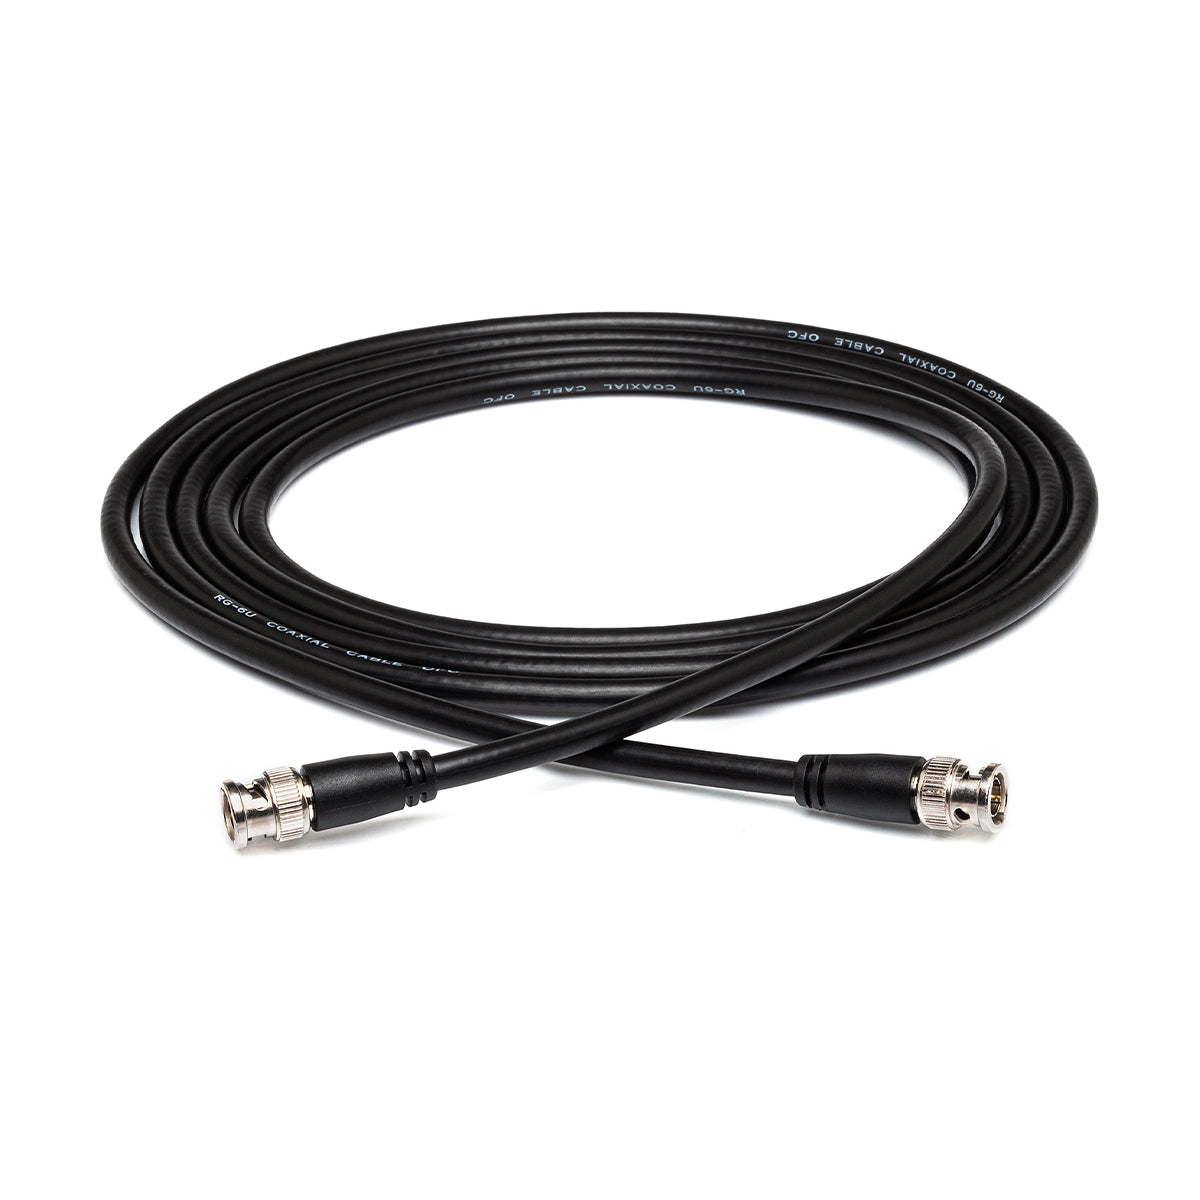 Hosa SDI PRO 75-ohm Coax Cable 10ft (BNC to BNC)